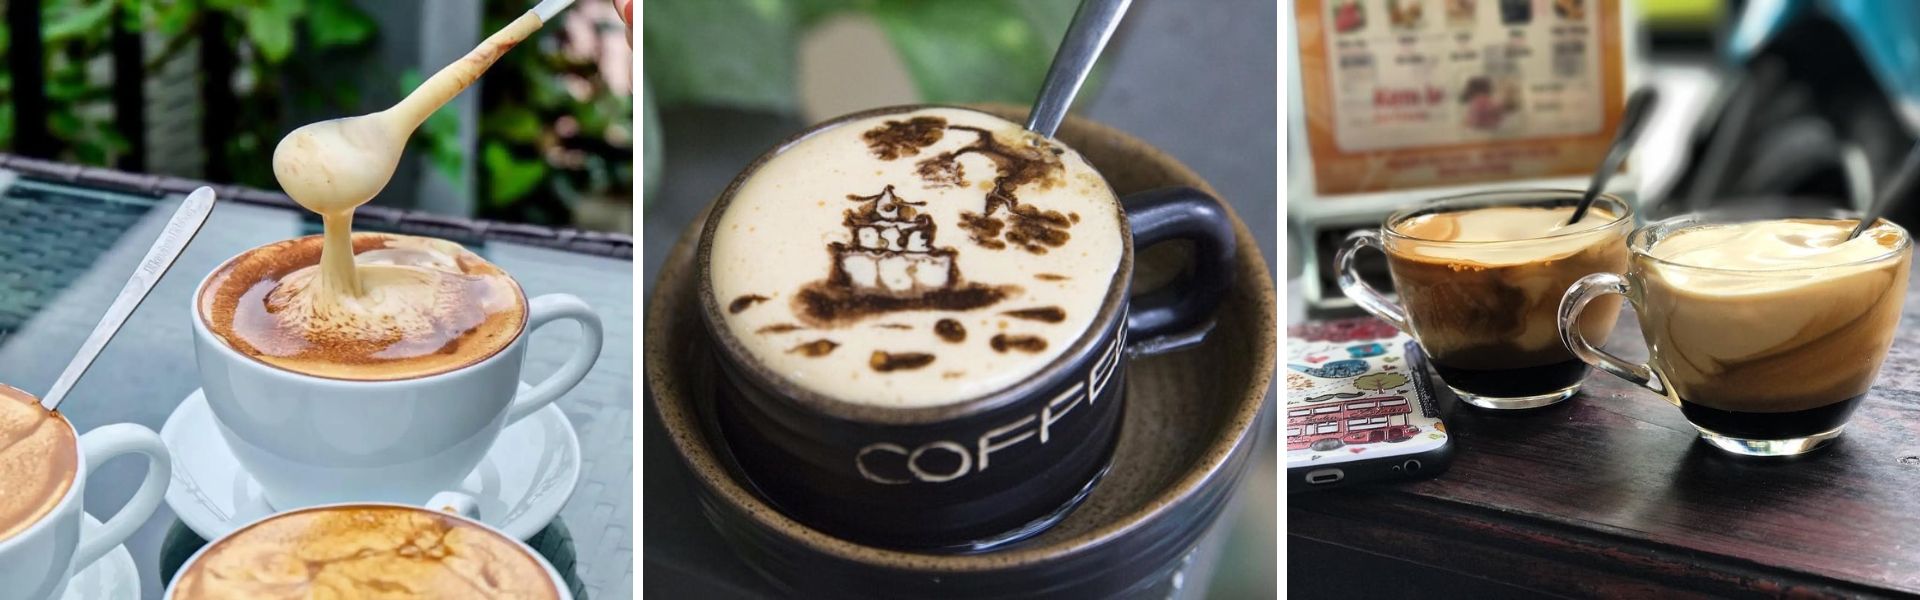 Café con huevo - un dulce símbolo de Hanói